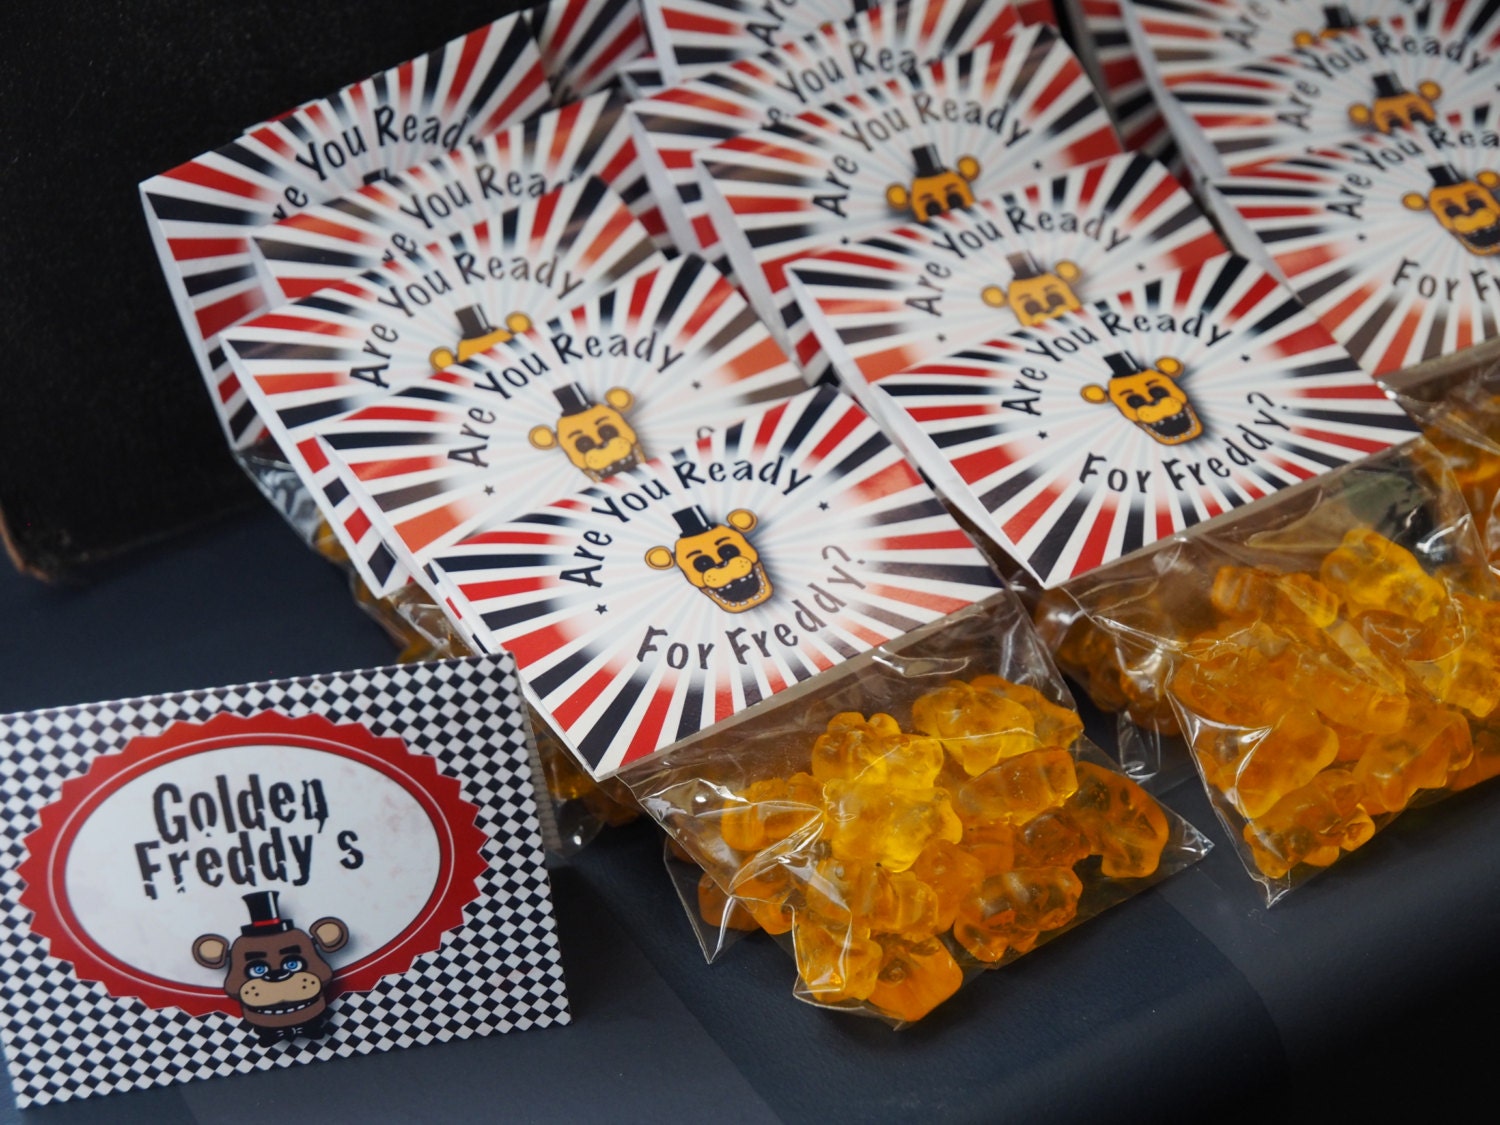 12 Pcs Five Nights at Freddy's Candy Box Gift Uganda